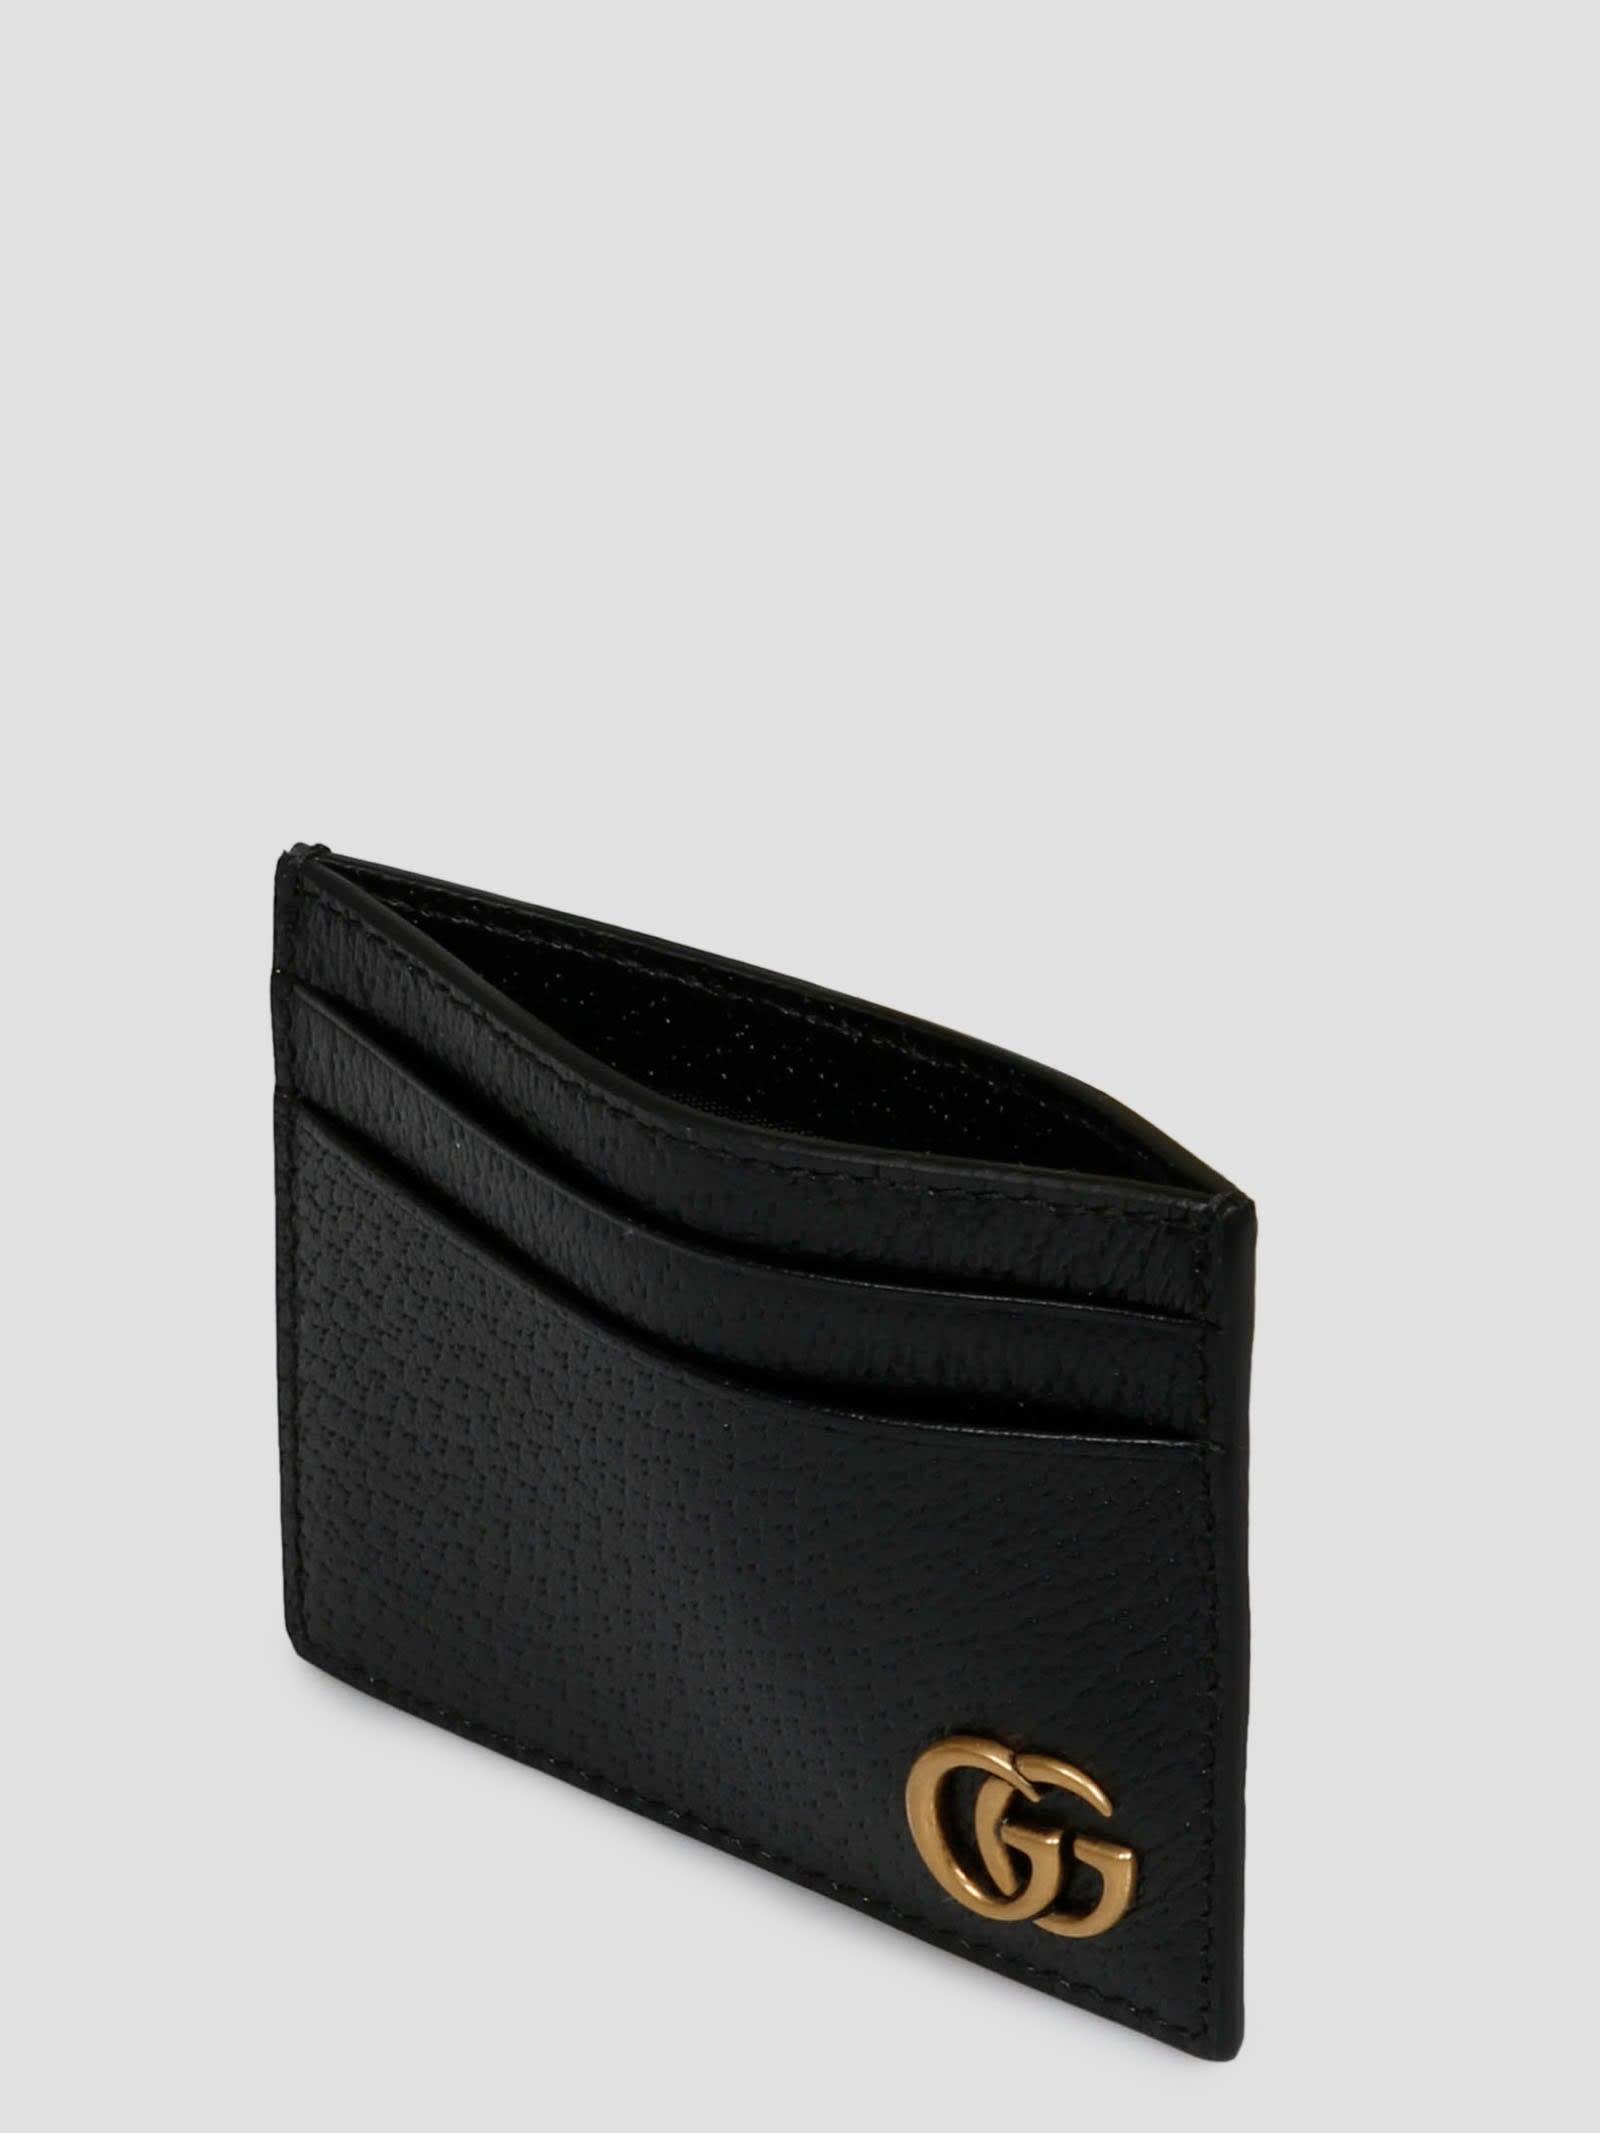 Black Leather GG Marmont Money Clip